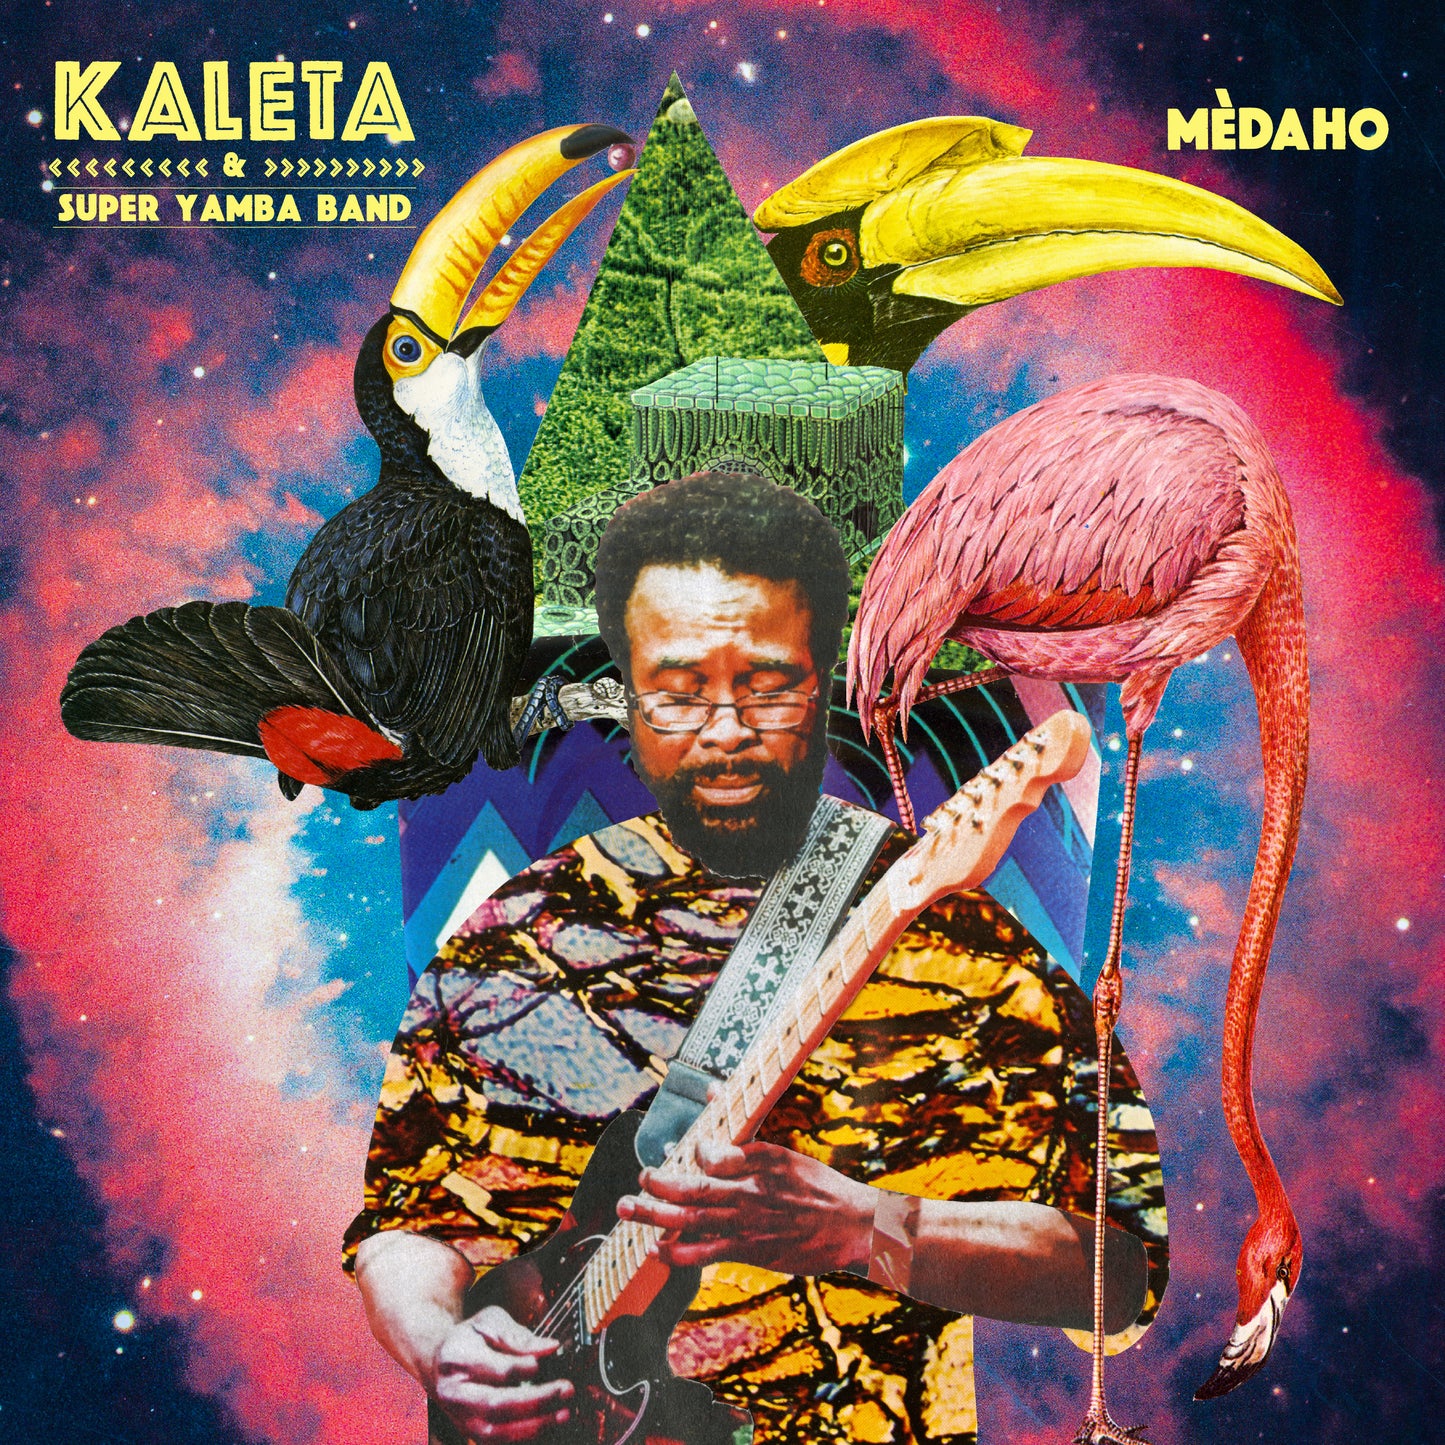 Kaleta & Super Yamba Band "Mèdaho" LP